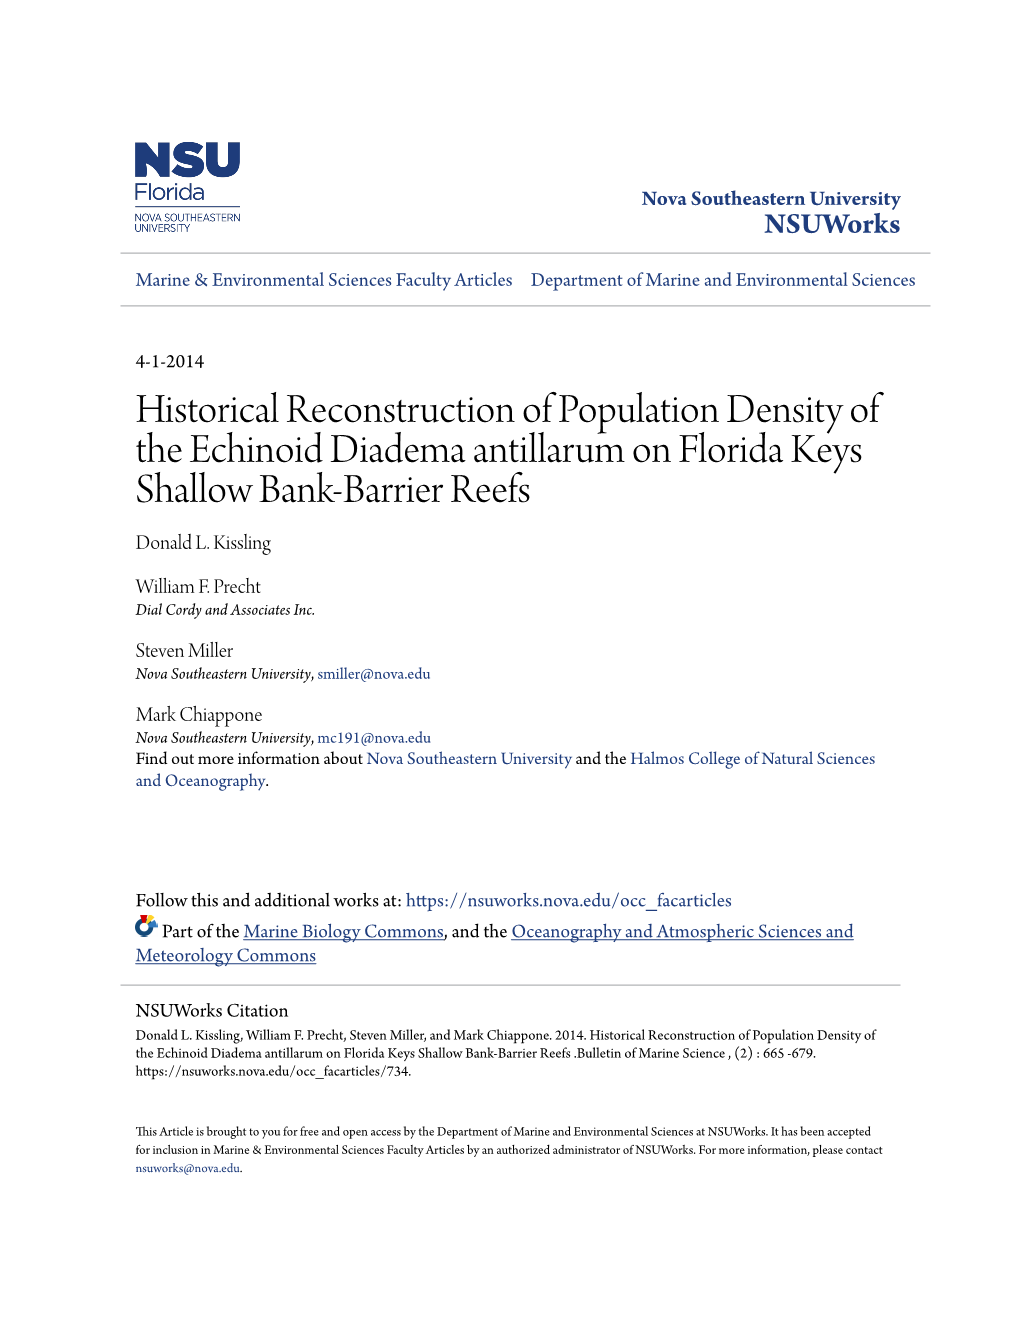 Historical Reconstruction of Population Density of the Echinoid Diadema Antillarum on Florida Keys Shallow Bank-Barrier Reefs Donald L